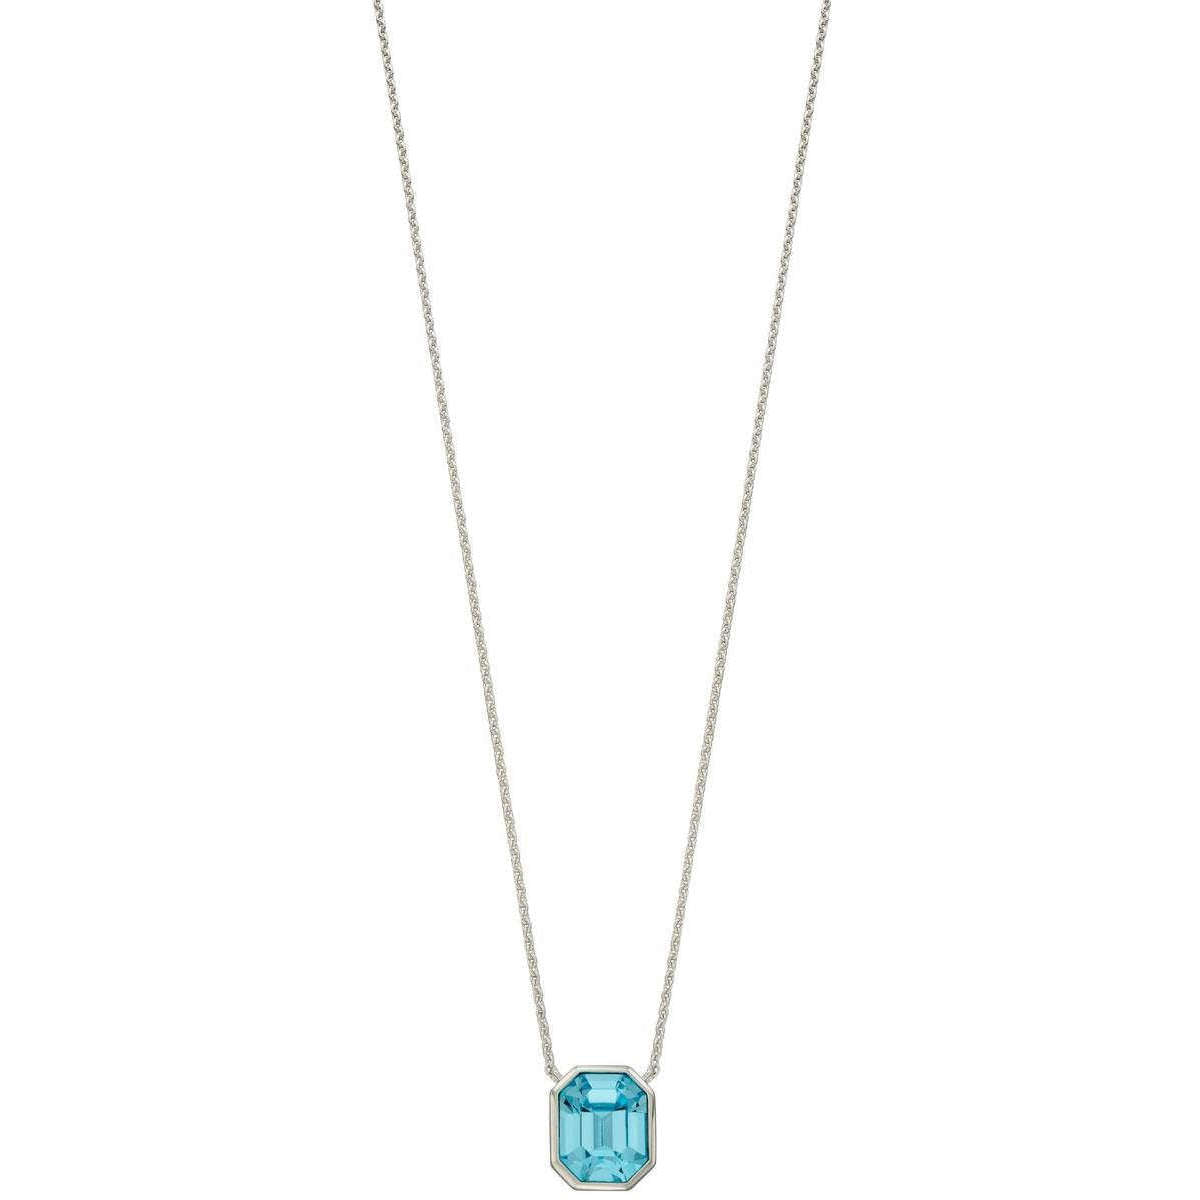 Elements Silver Elonged Octagon Aquamarine Crystal Necklace - Silver/Blue